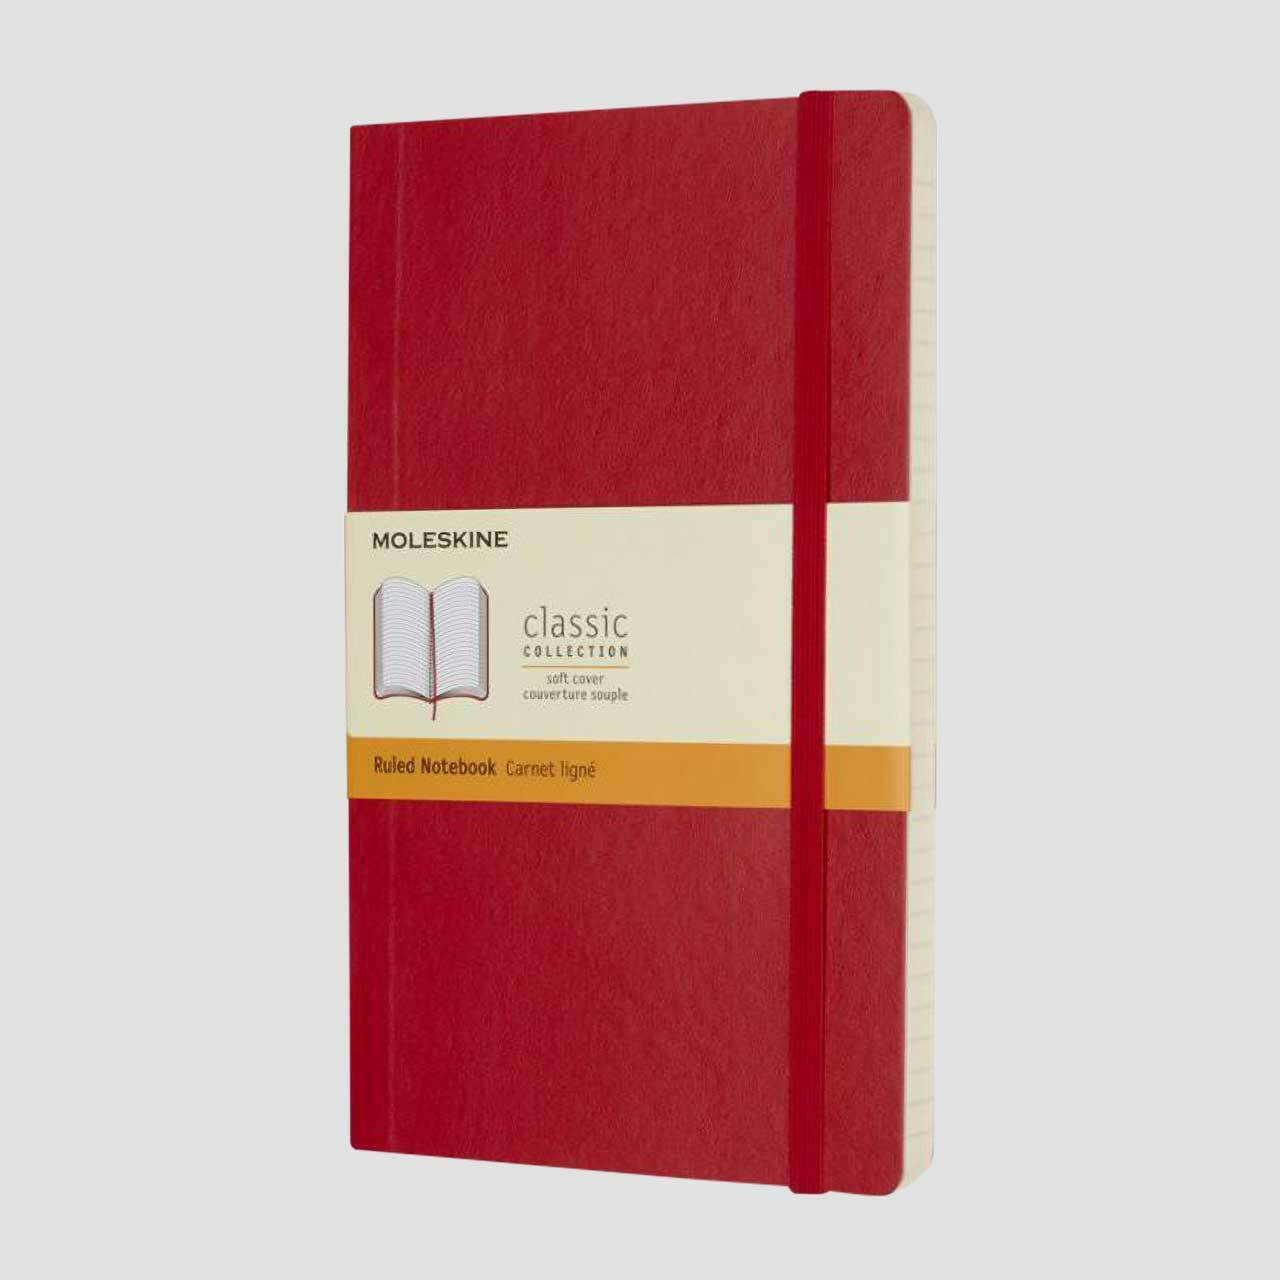 Moleskine notitieboek soft cover sapphire rood